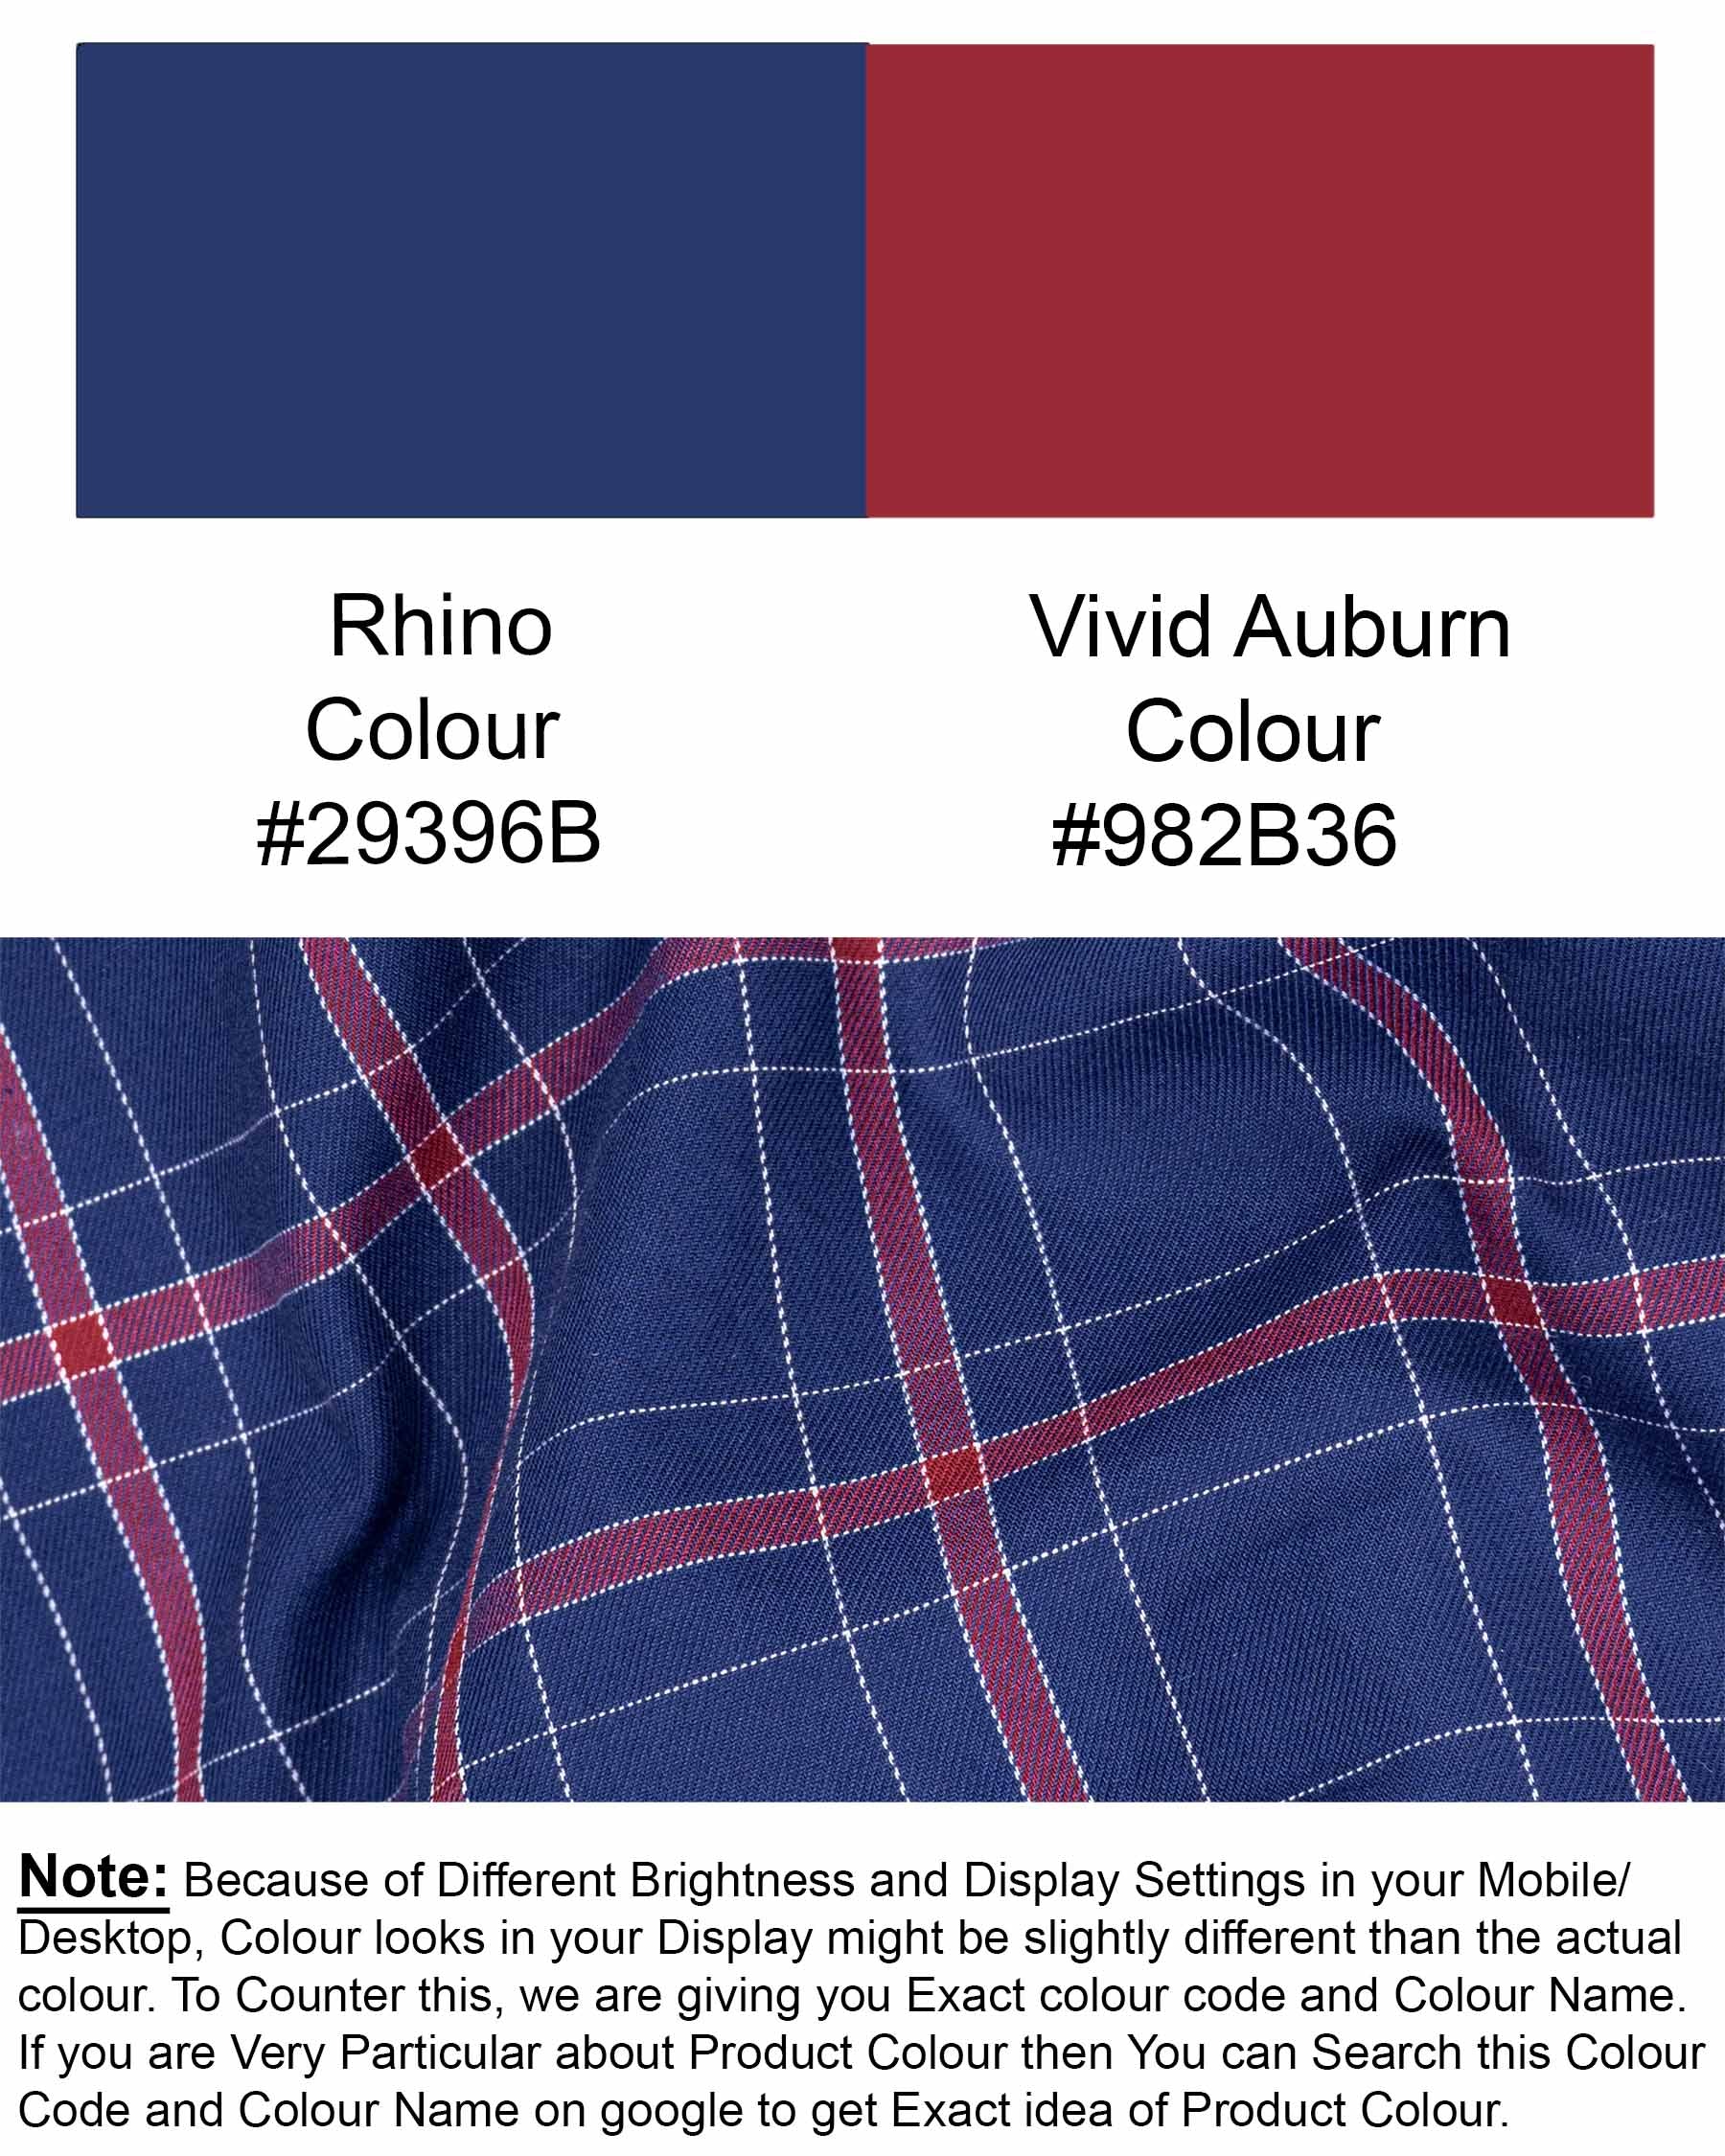 Rhino Blue Windowpane Twill Premium Cotton Shirt 6970-BD-38,6970-BD-38,6970-BD-39,6970-BD-39,6970-BD-40,6970-BD-40,6970-BD-42,6970-BD-42,6970-BD-44,6970-BD-44,6970-BD-46,6970-BD-46,6970-BD-48,6970-BD-48,6970-BD-50,6970-BD-50,6970-BD-52,6970-BD-52